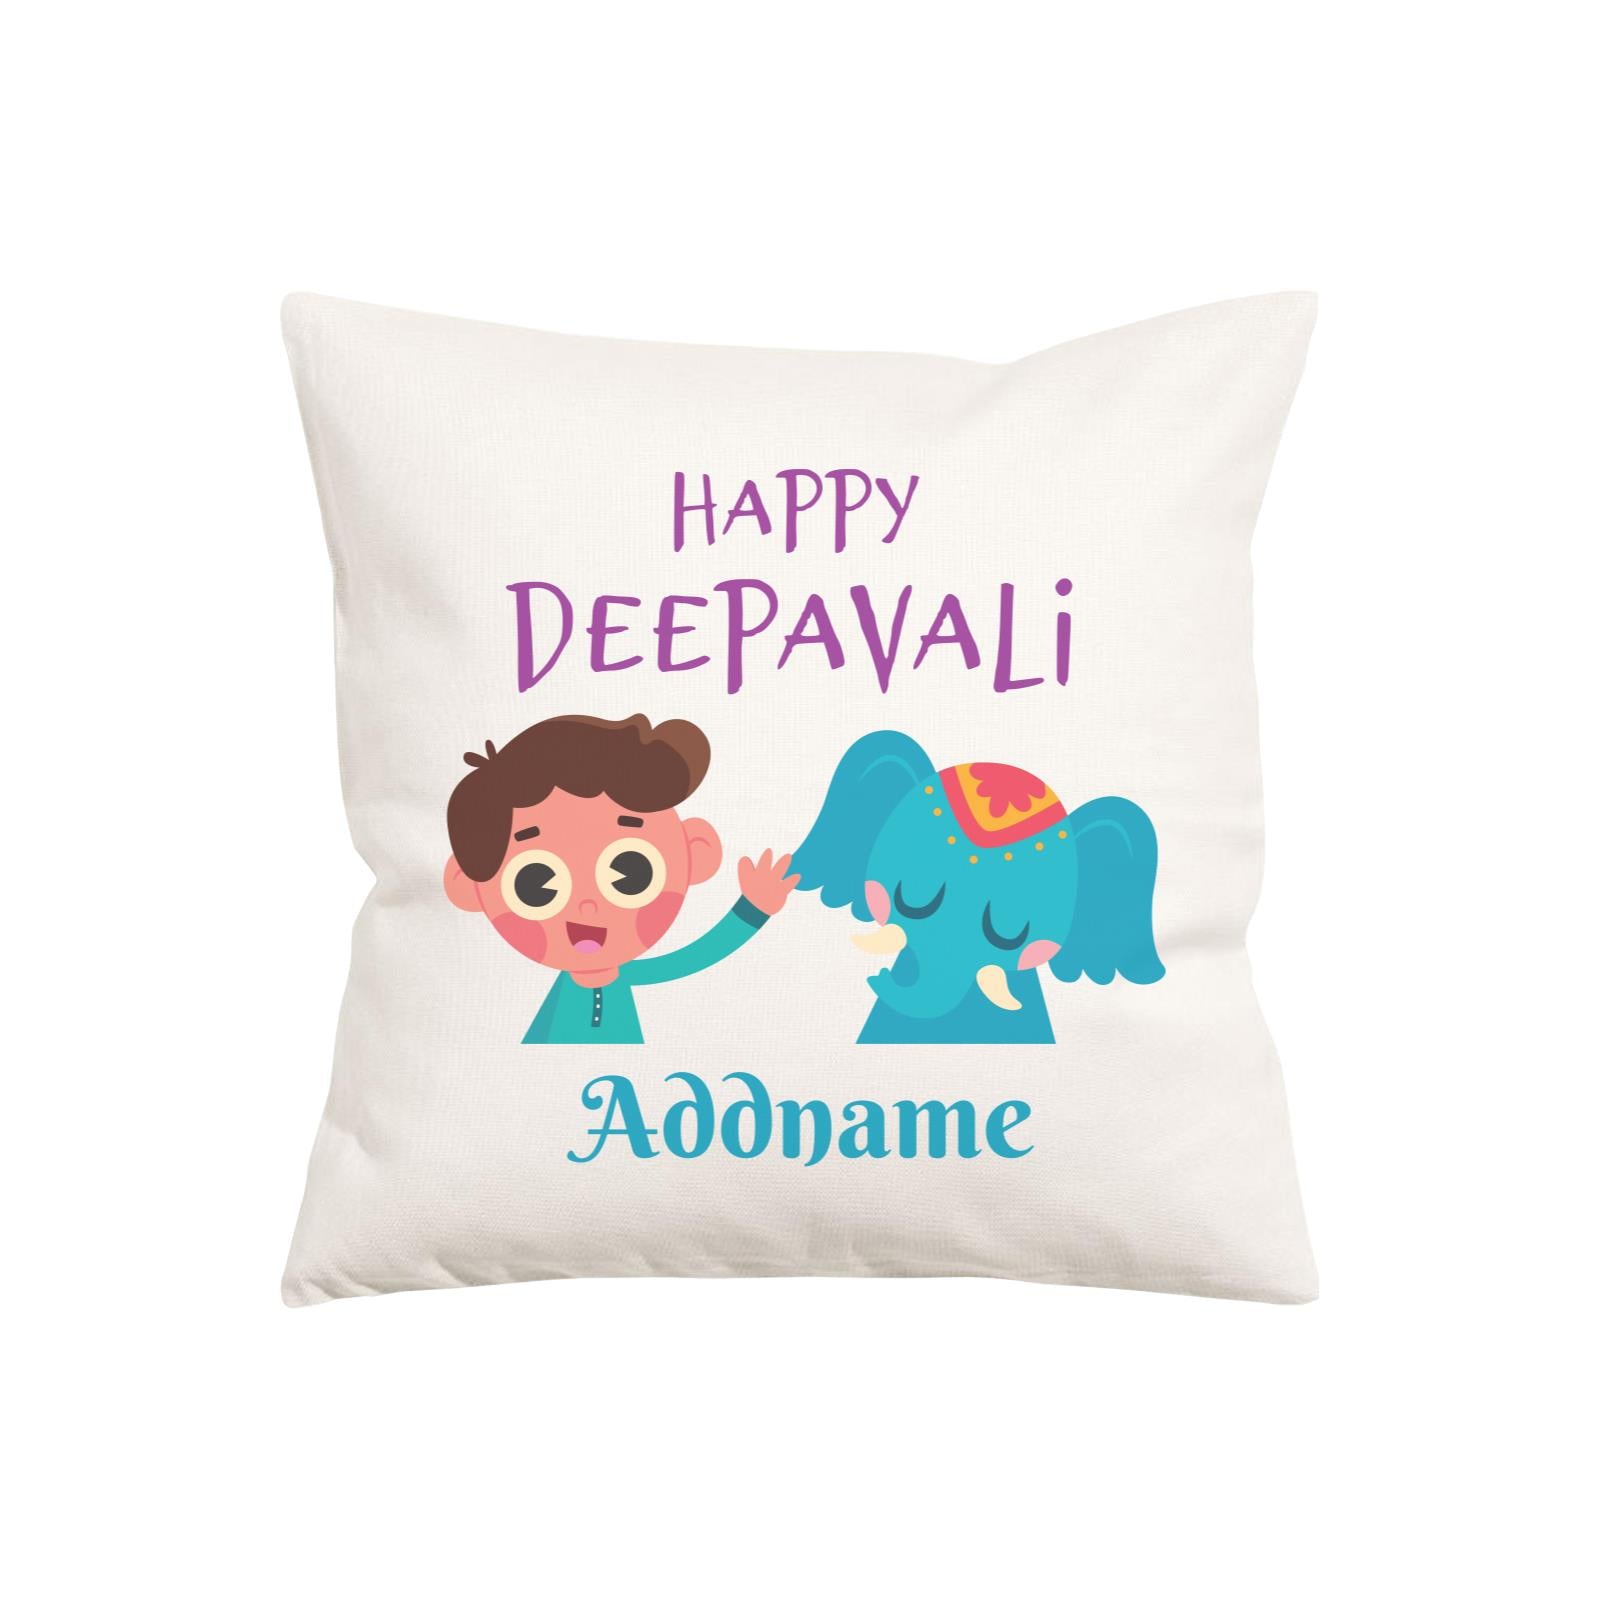 Deepavali Series Little Boy Wishes You Happy Deepavali PW Cushion